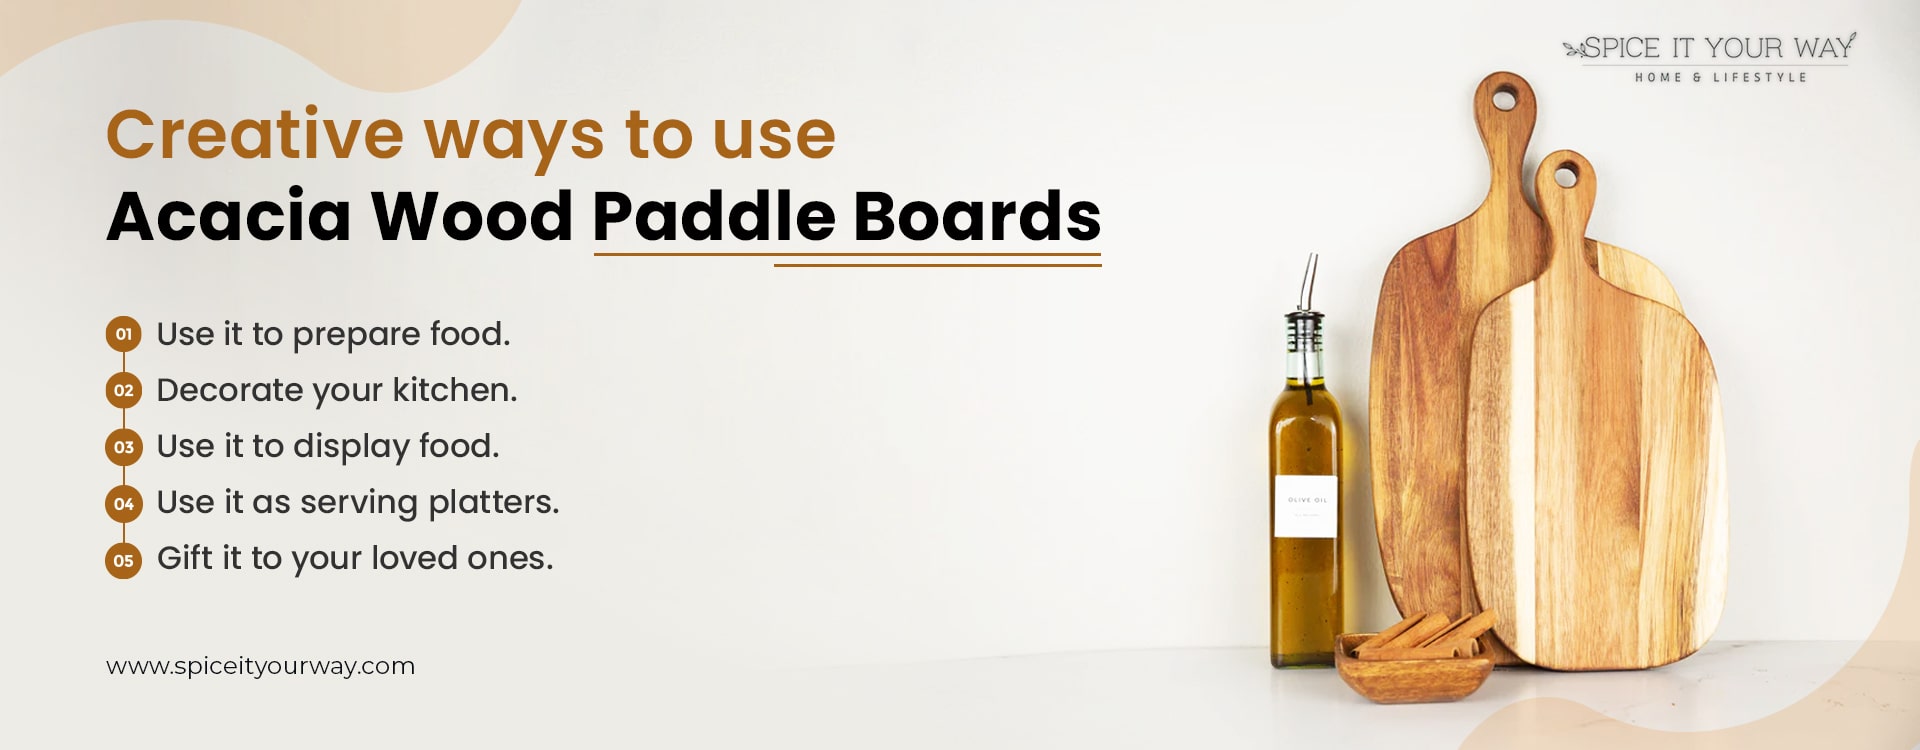 Creative ways to use acacia wood paddle boards